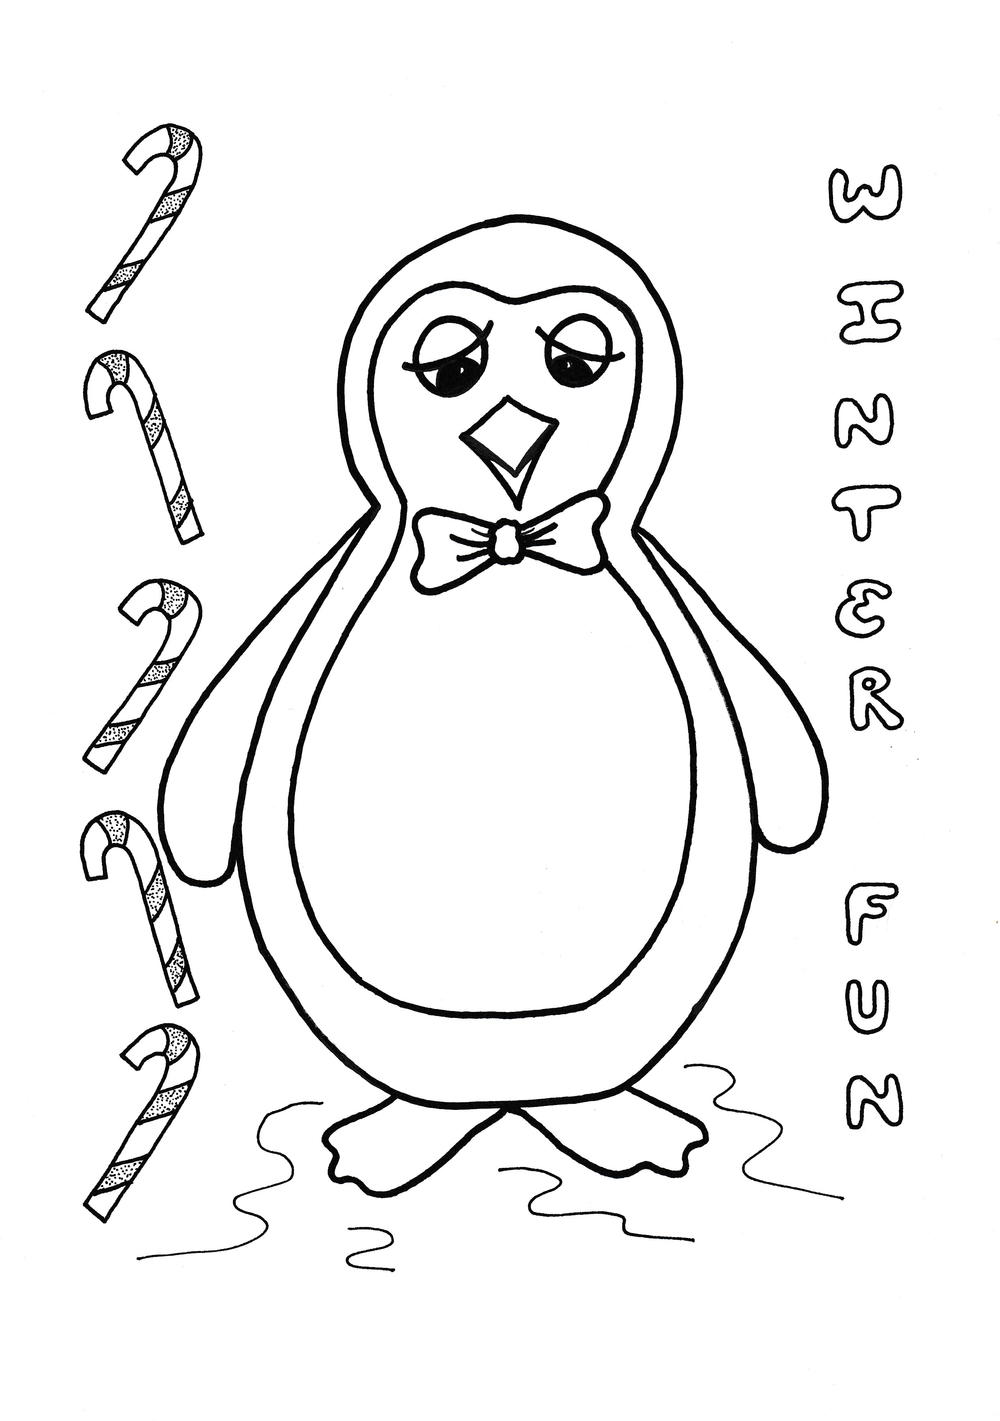 penguin colouring sheet cute baby penguin coloring pages only coloring pages colouring sheet penguin 